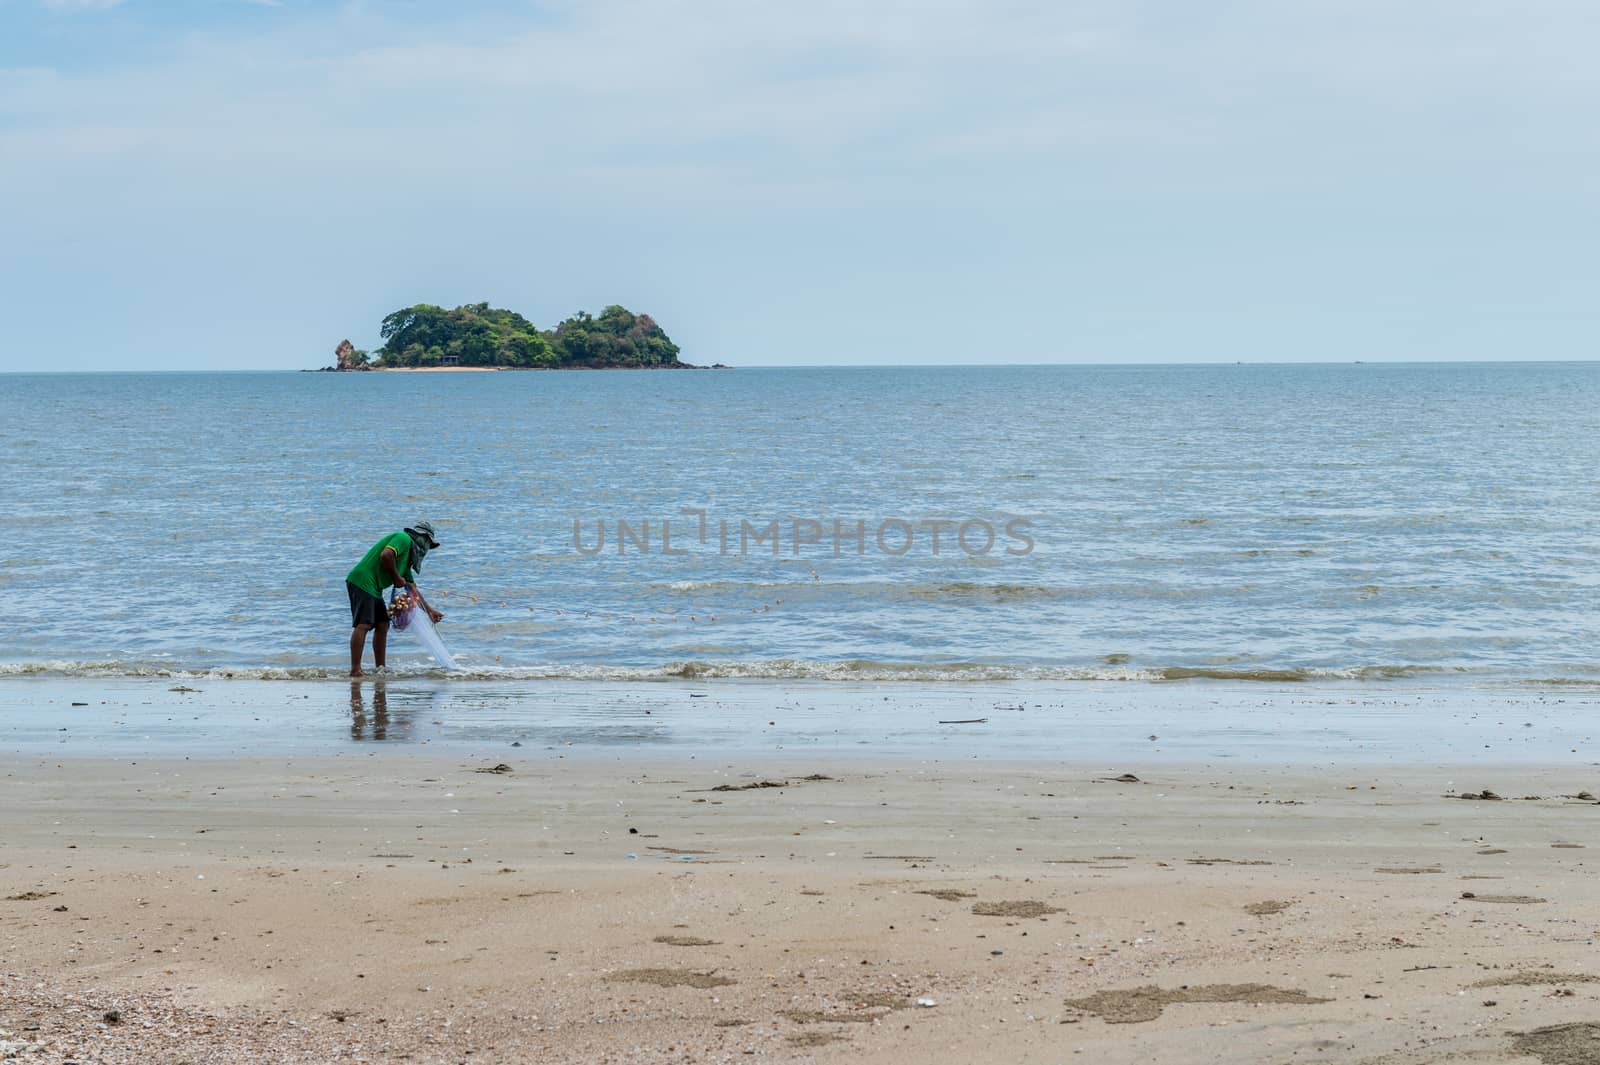 Fisherman with him job on the beach by sayhmog